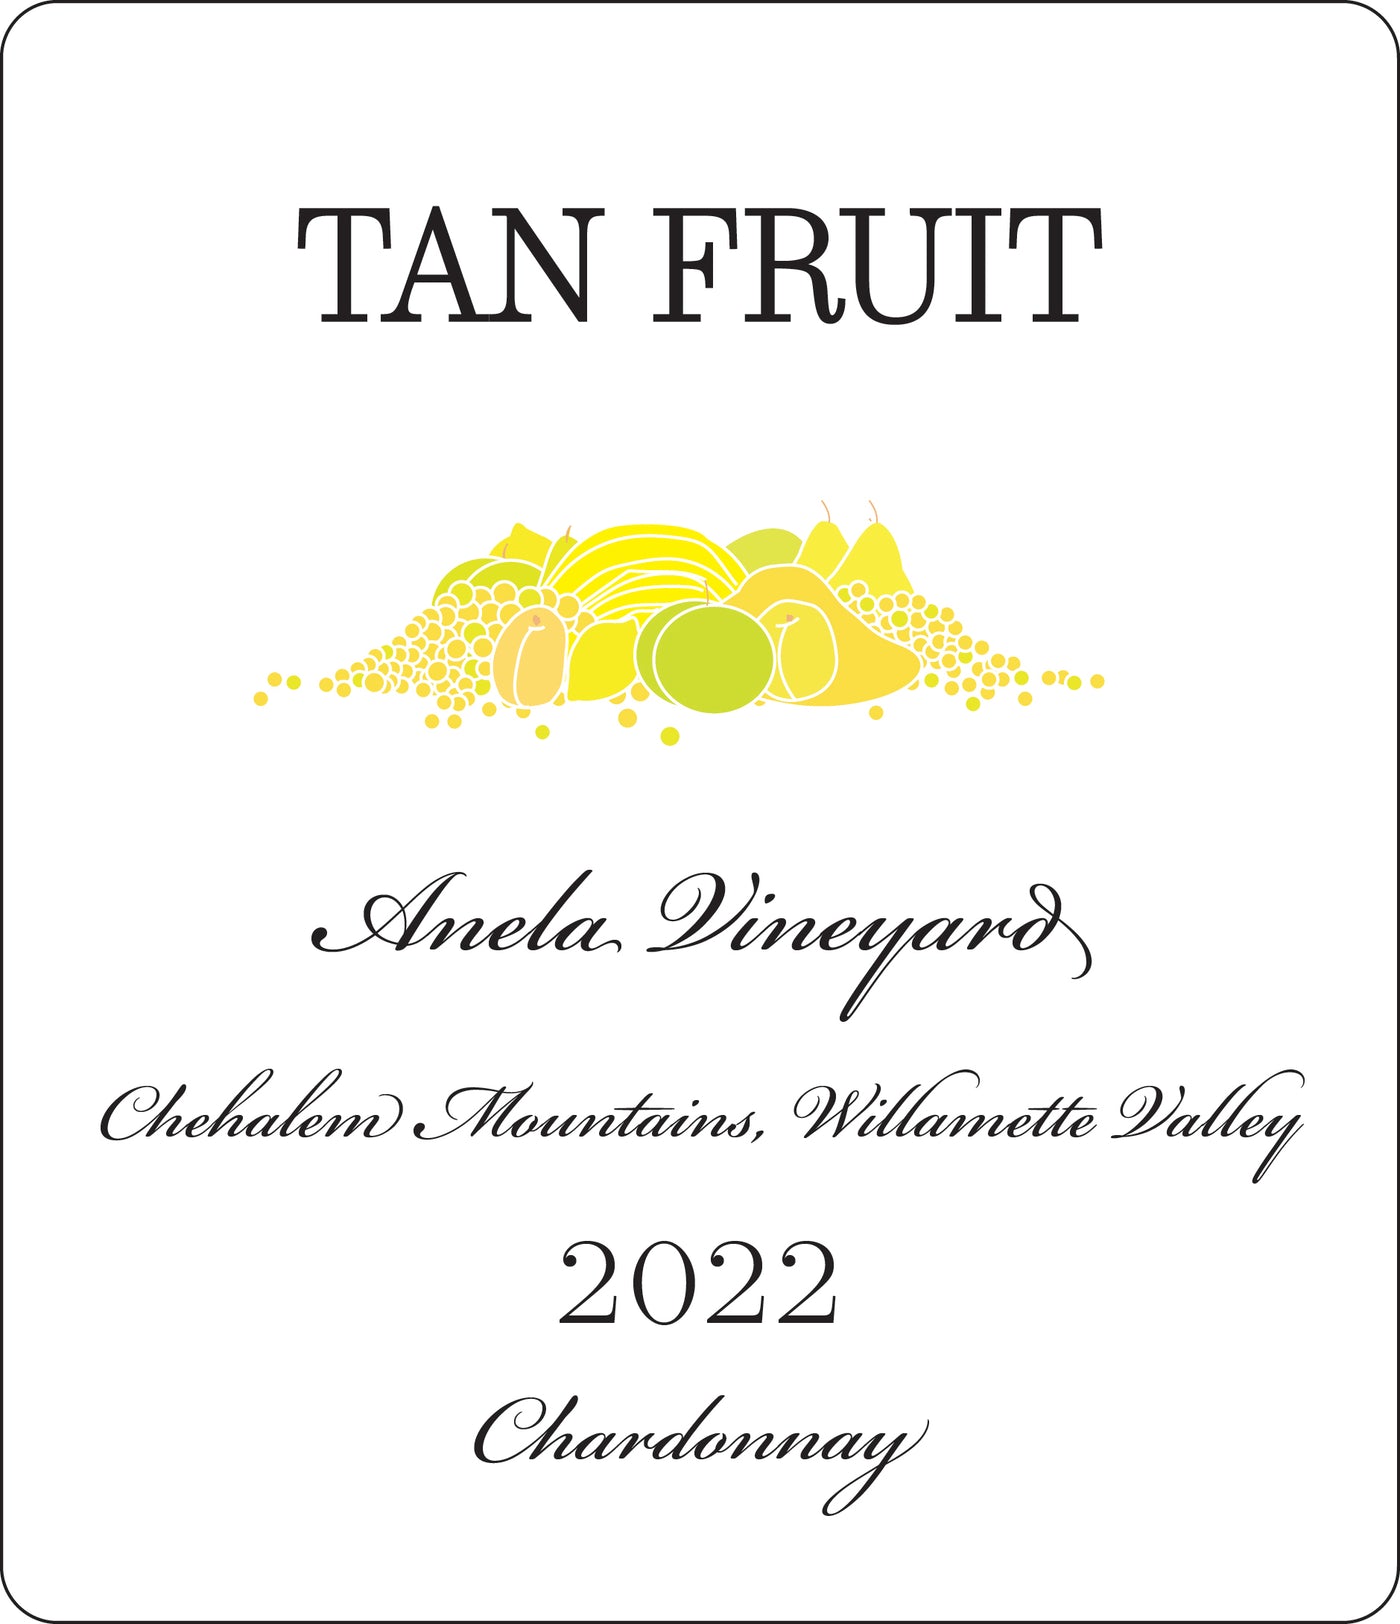 Tan Fruit Anela Vineyard Chardonnay 2022